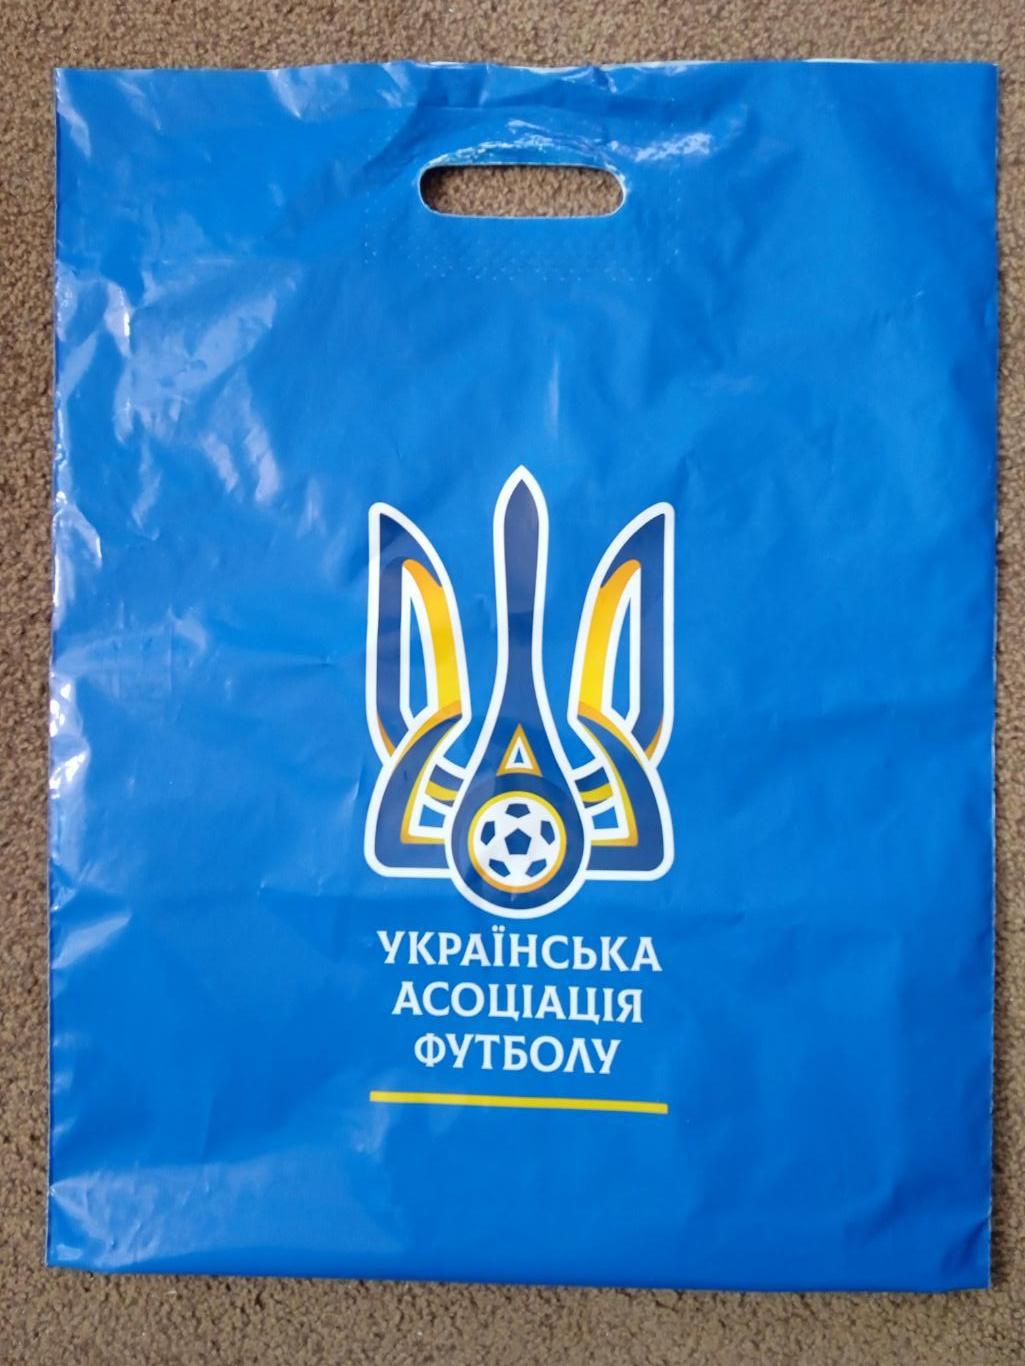 Пакет ,футбол-Украина, федерация .